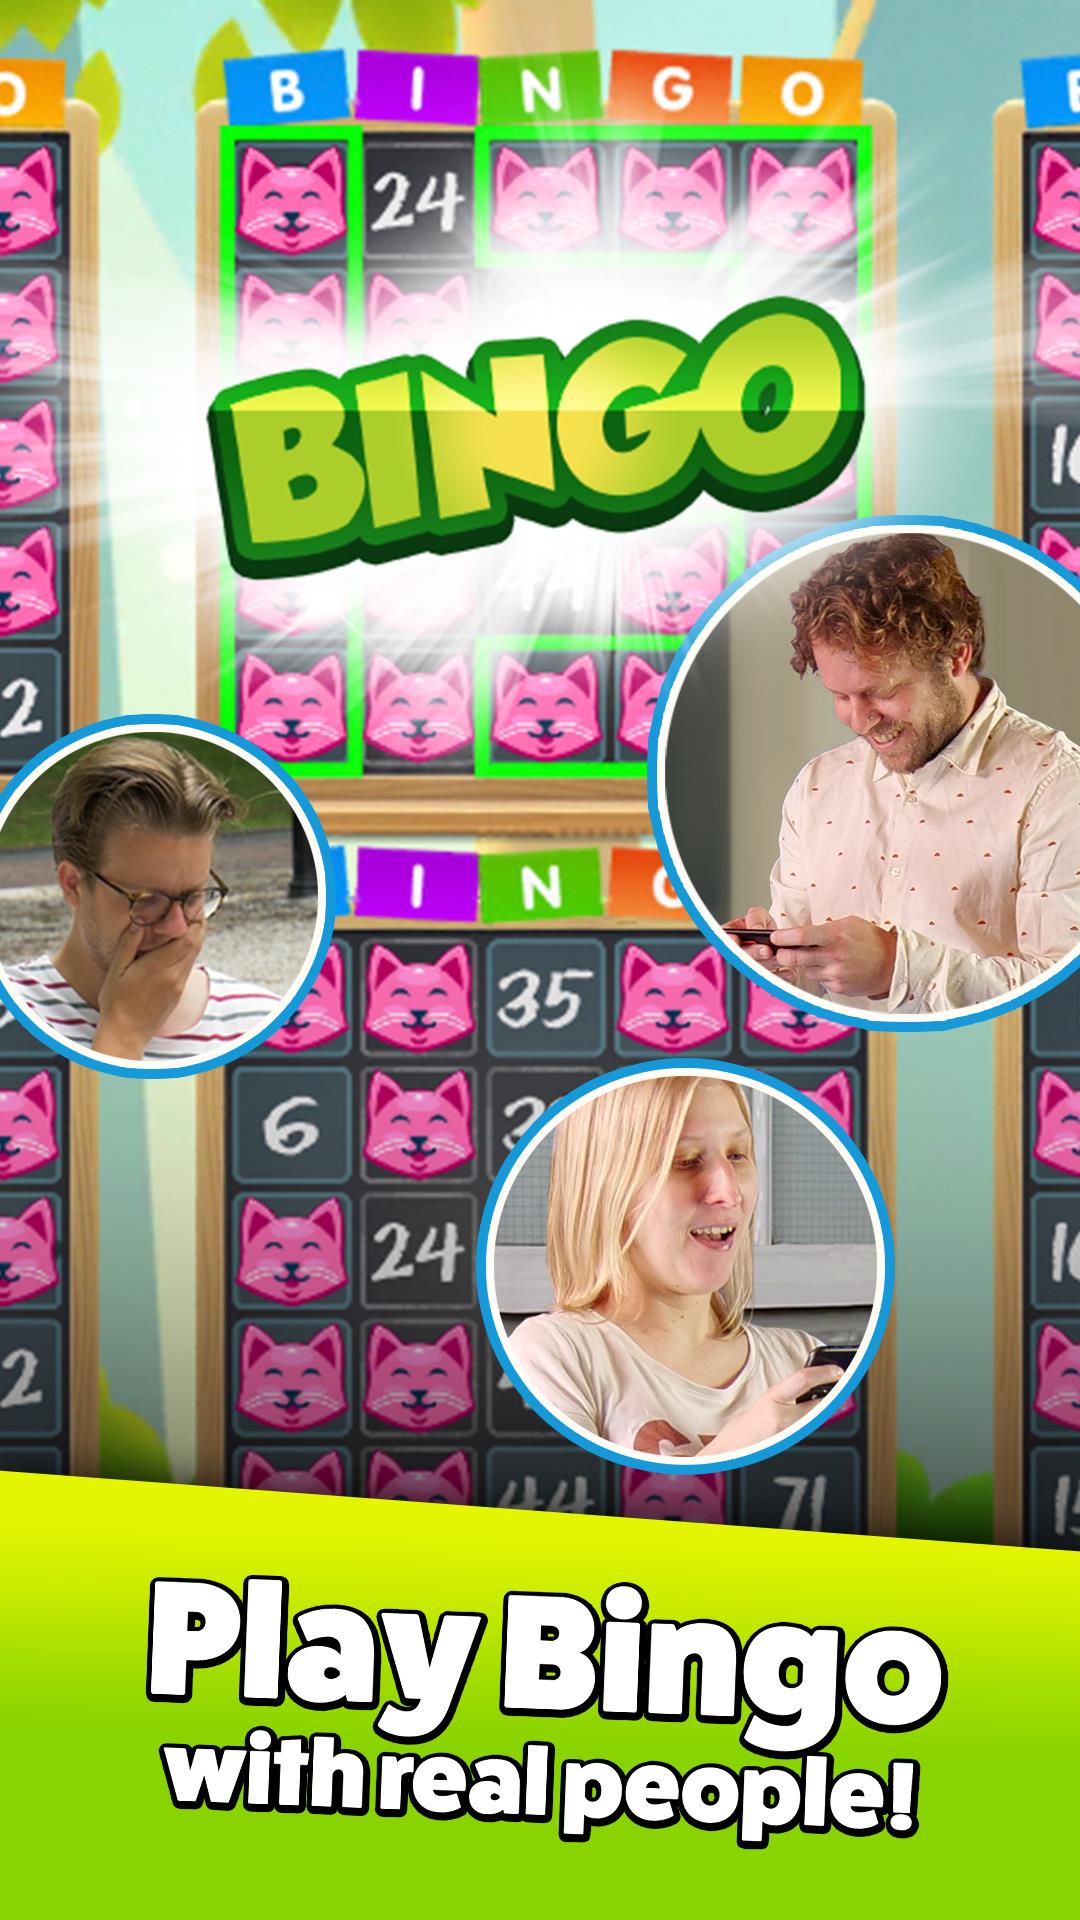 GamePoint Bingo - Bingo games Screenshot 1